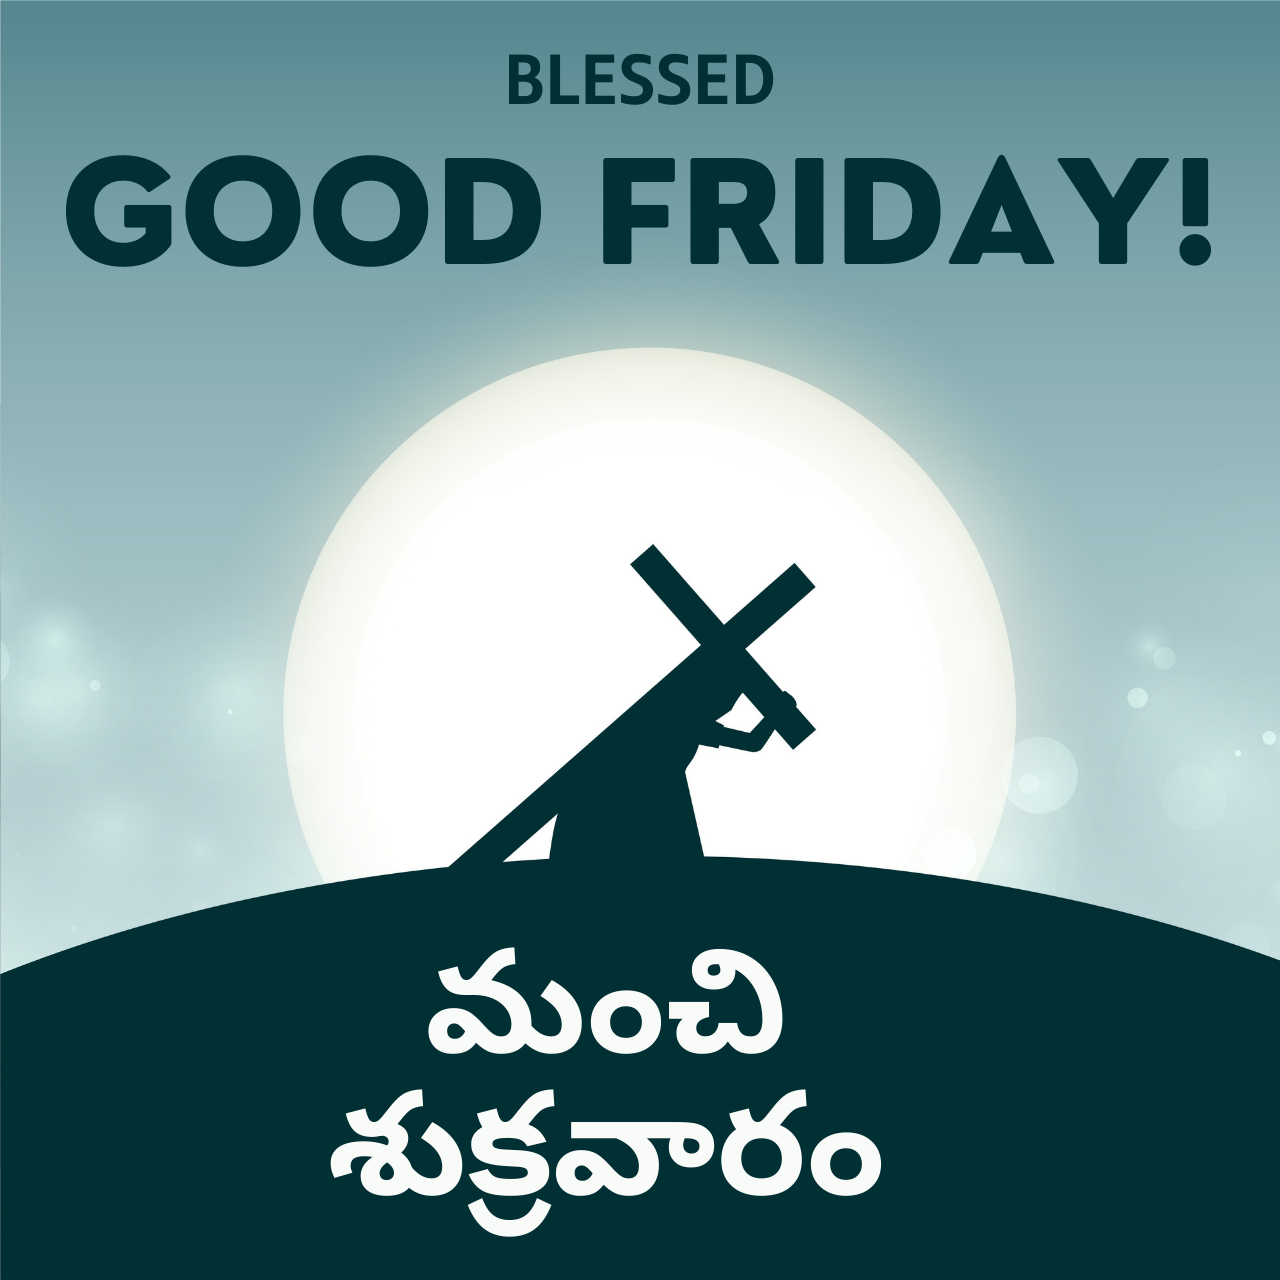 Good Friday 2023 Telugu and Kannada Wishes, Images, Messages, Greetings, Quotes, Shayari and Sayings